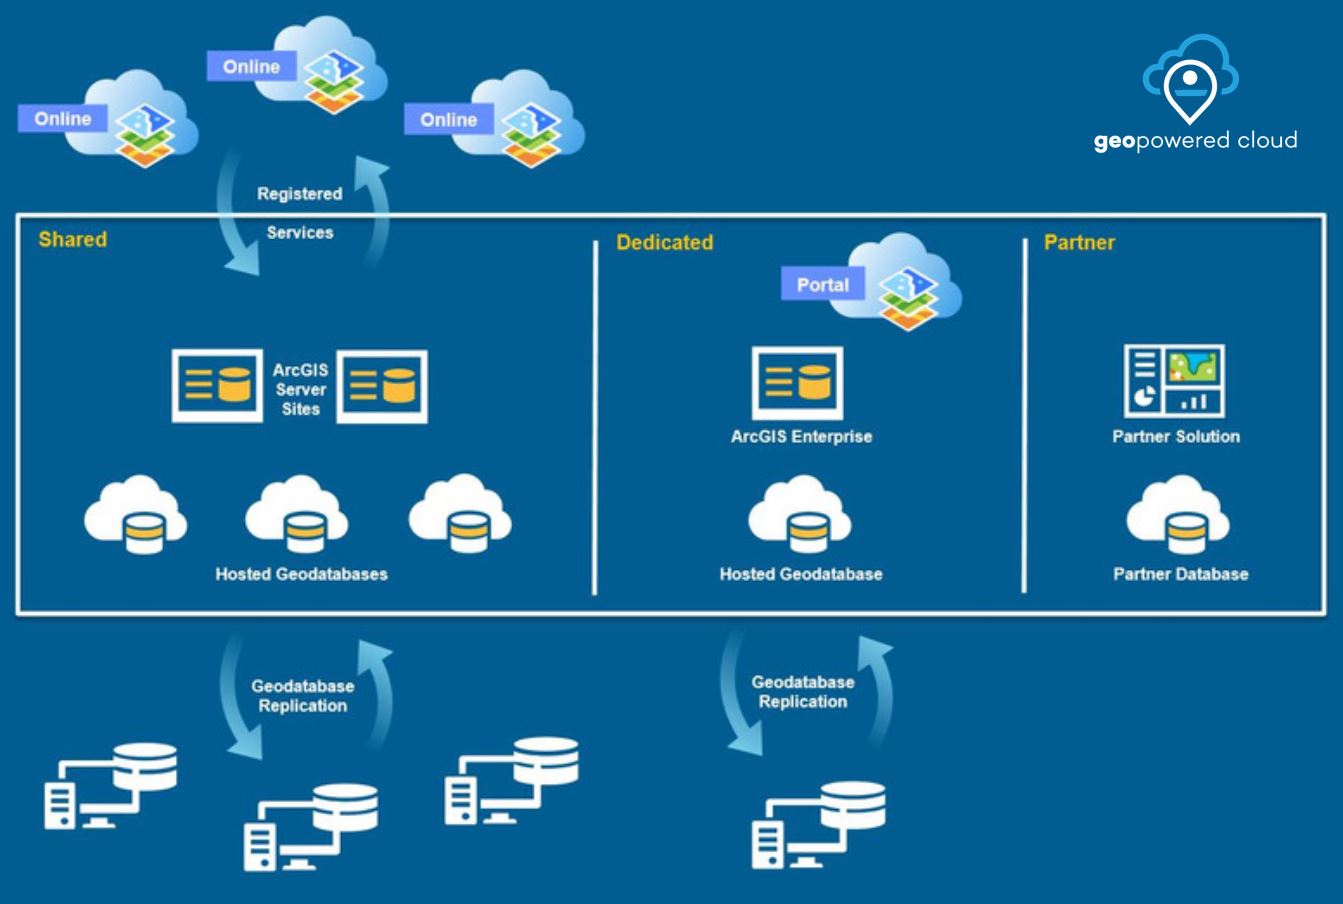 Slid Bane Dyrt Learn About the GEOPowered Cloud at EPC – An Enterprise GIS Deployment  Platform - GEO Jobe